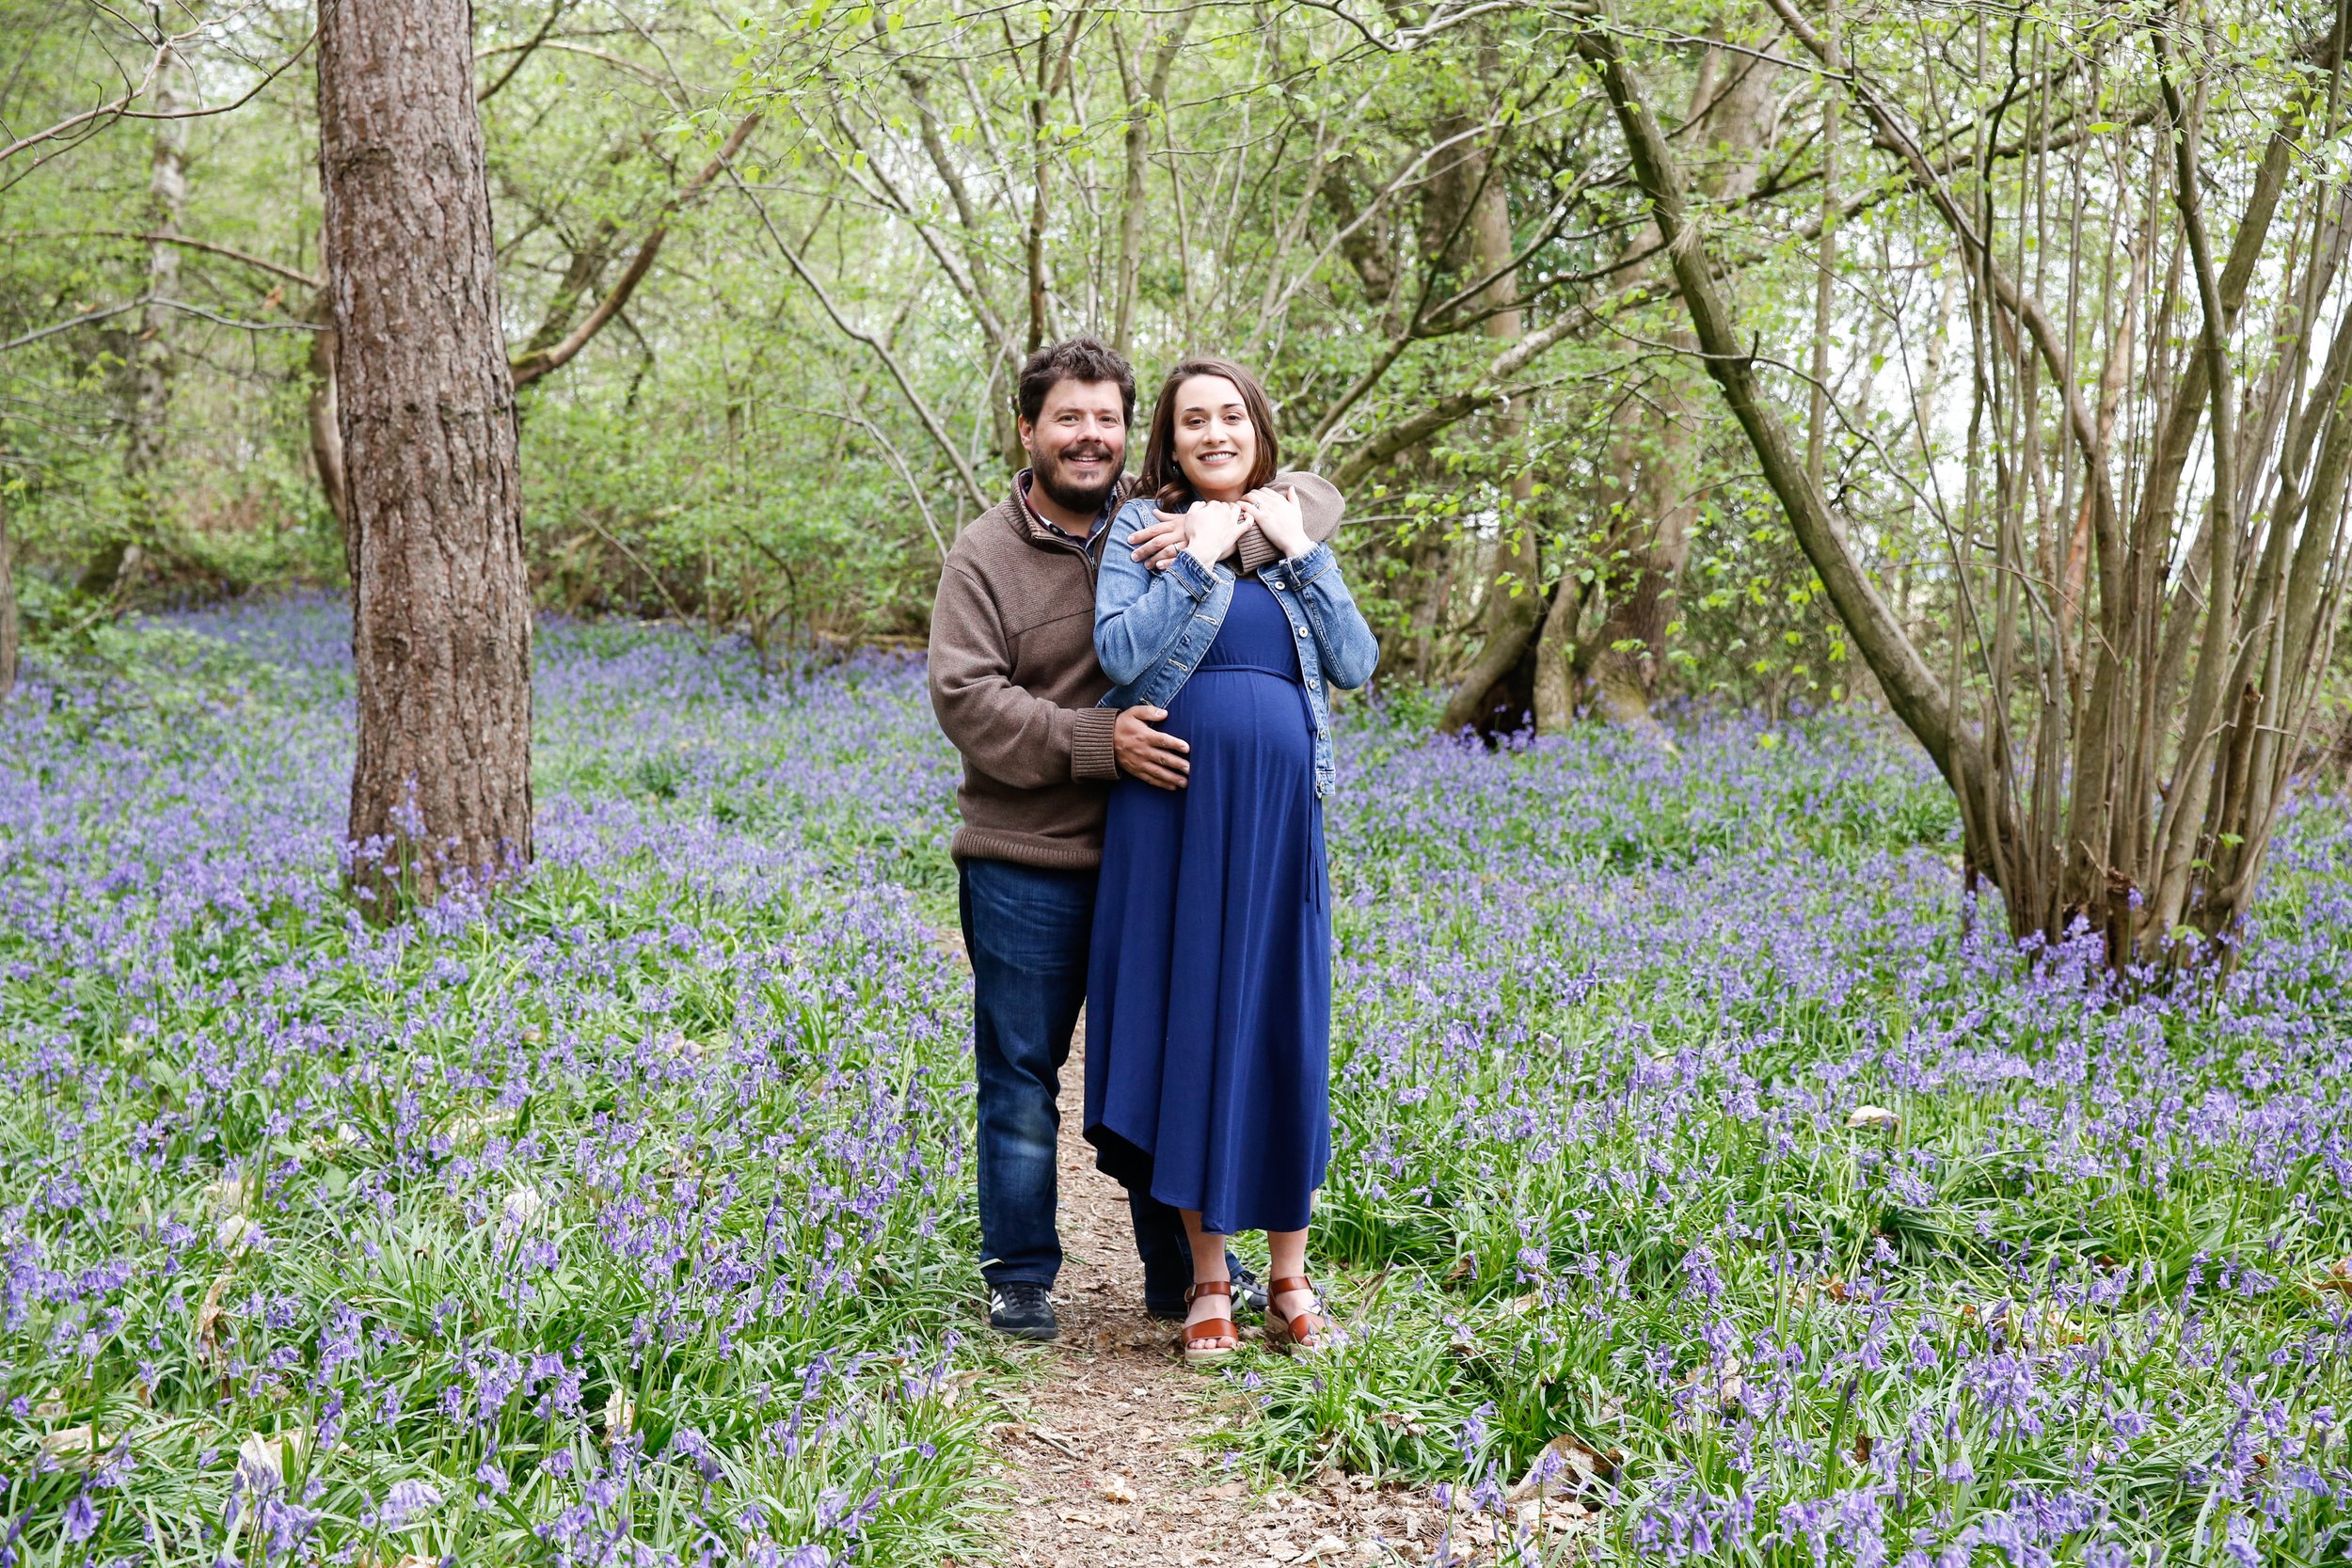 Maternity photo shoot in Berkshire | Bluebell pregnancy photos with Sarah & Bob86 choice .JPG